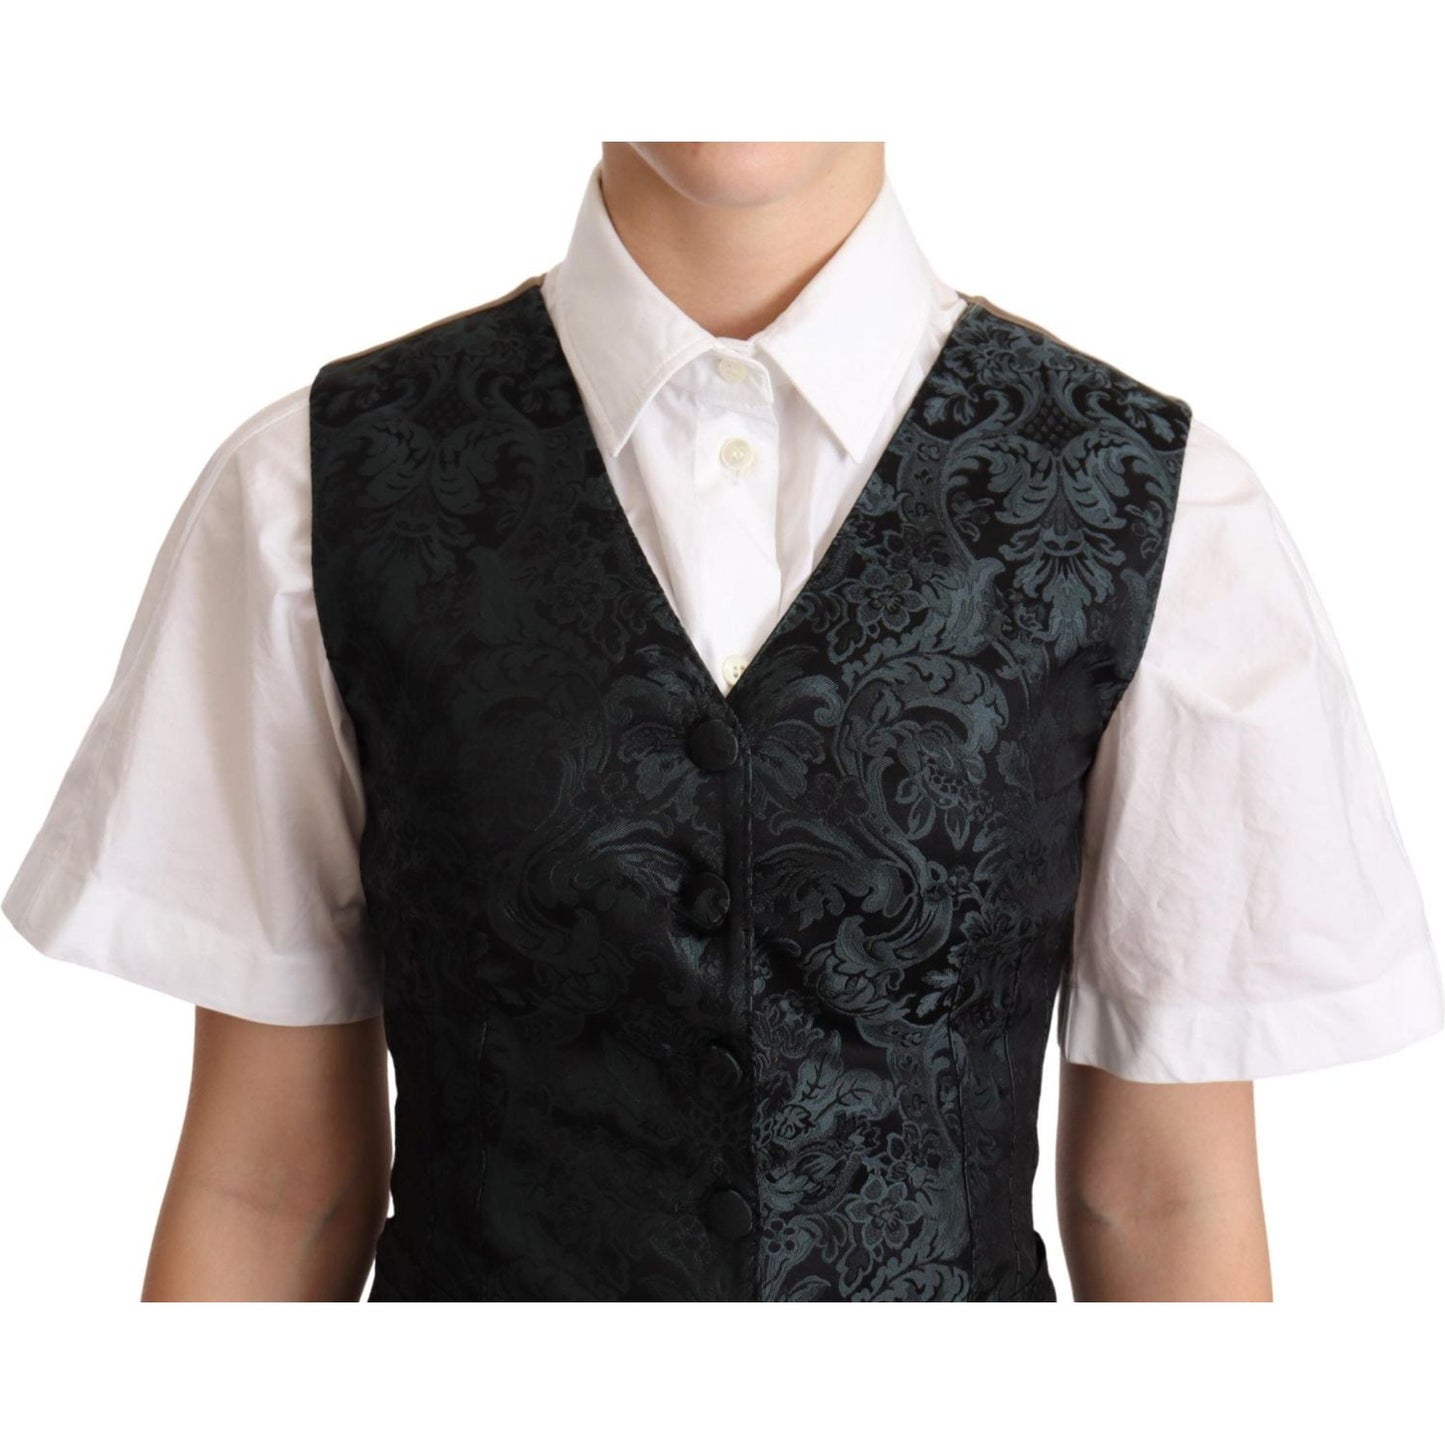 Dolce & Gabbana Enchanting Jacquard Floral Waistcoat Vest Jacket black-jacquard-floral-waistcoat-vest-green